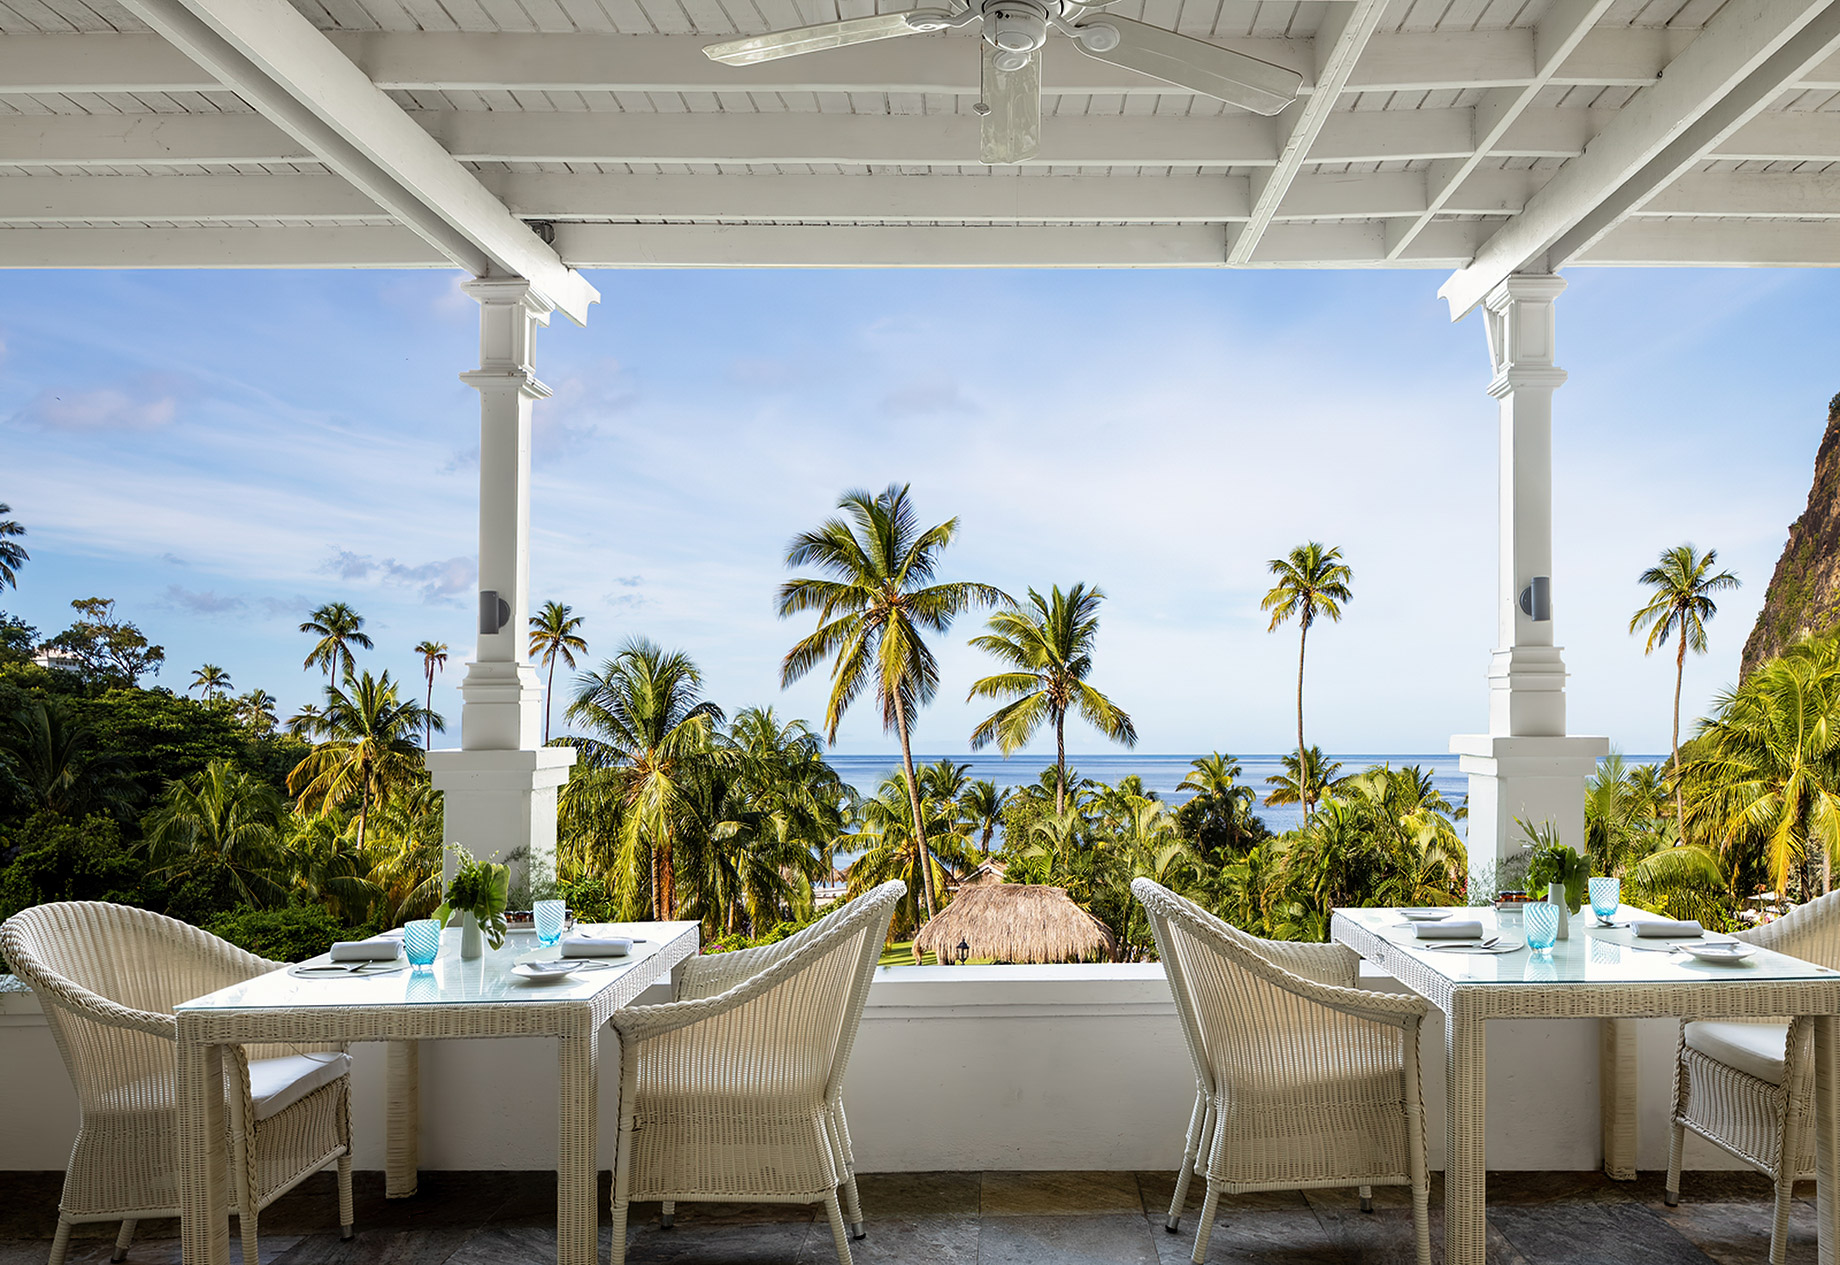 Sugar Beach, A Viceroy Resort - La Baie de Silence, Saint Lucia - Terrace Restaurant Ocean View